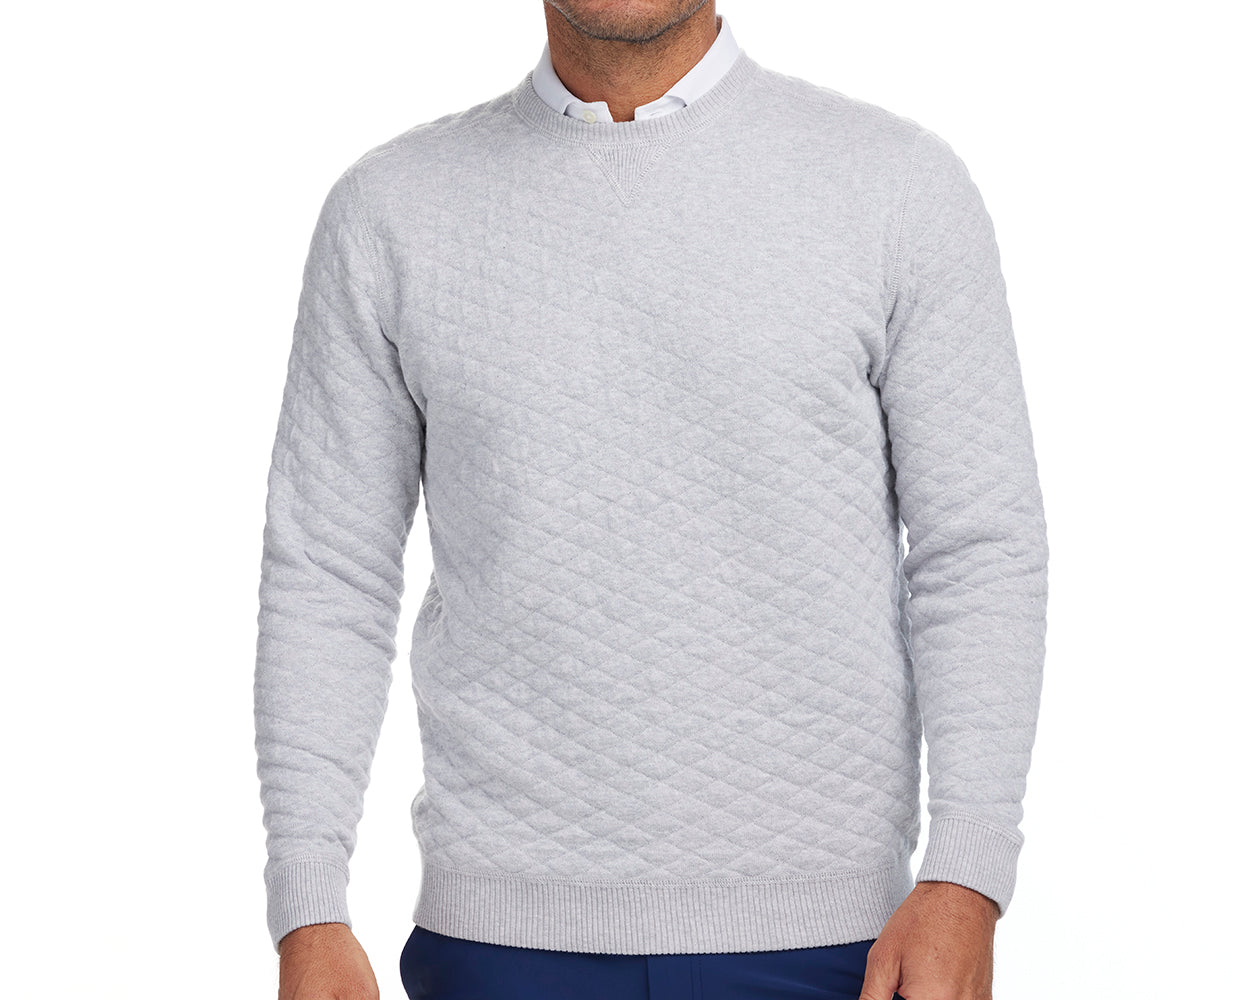 ANNIE'S SIGNATURE DESIGNS: Men's Cabled Sweater Vest Knit Pattern